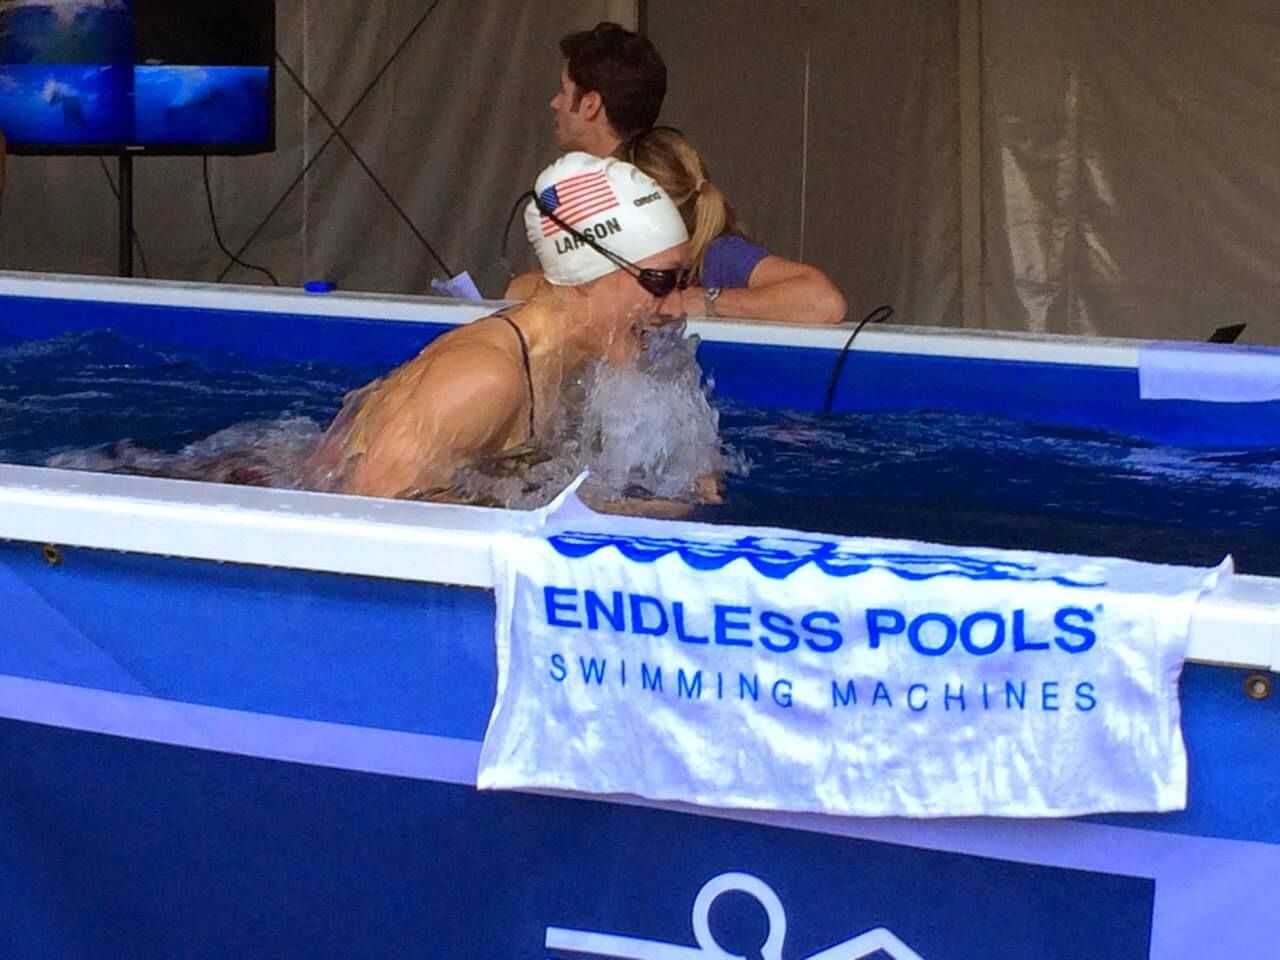 Olympic swimmer Breeja Larson doing breaststroke in the High Performance Endless Pool